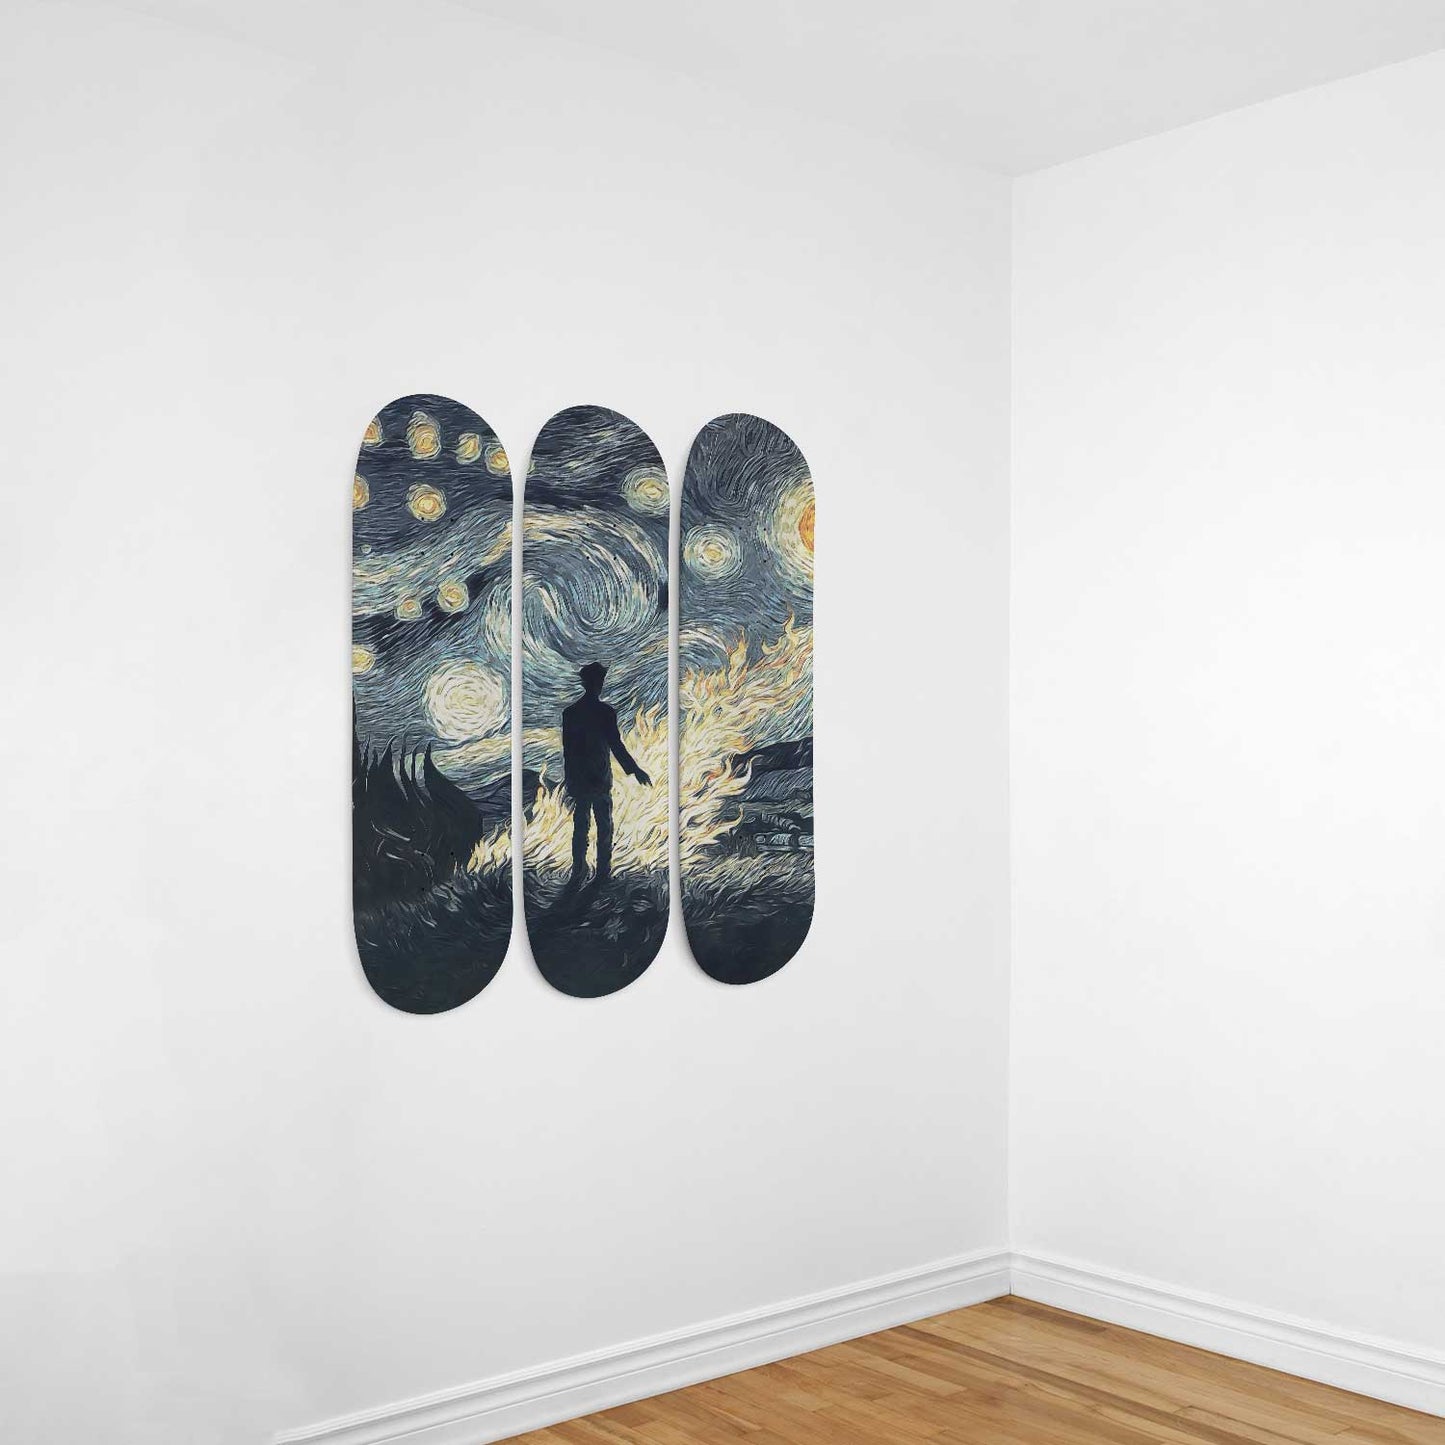 Van Gogh Burning Leaves 3-Deck Skateboard Wall Art: Masterpiece, Nature-Inspired Design